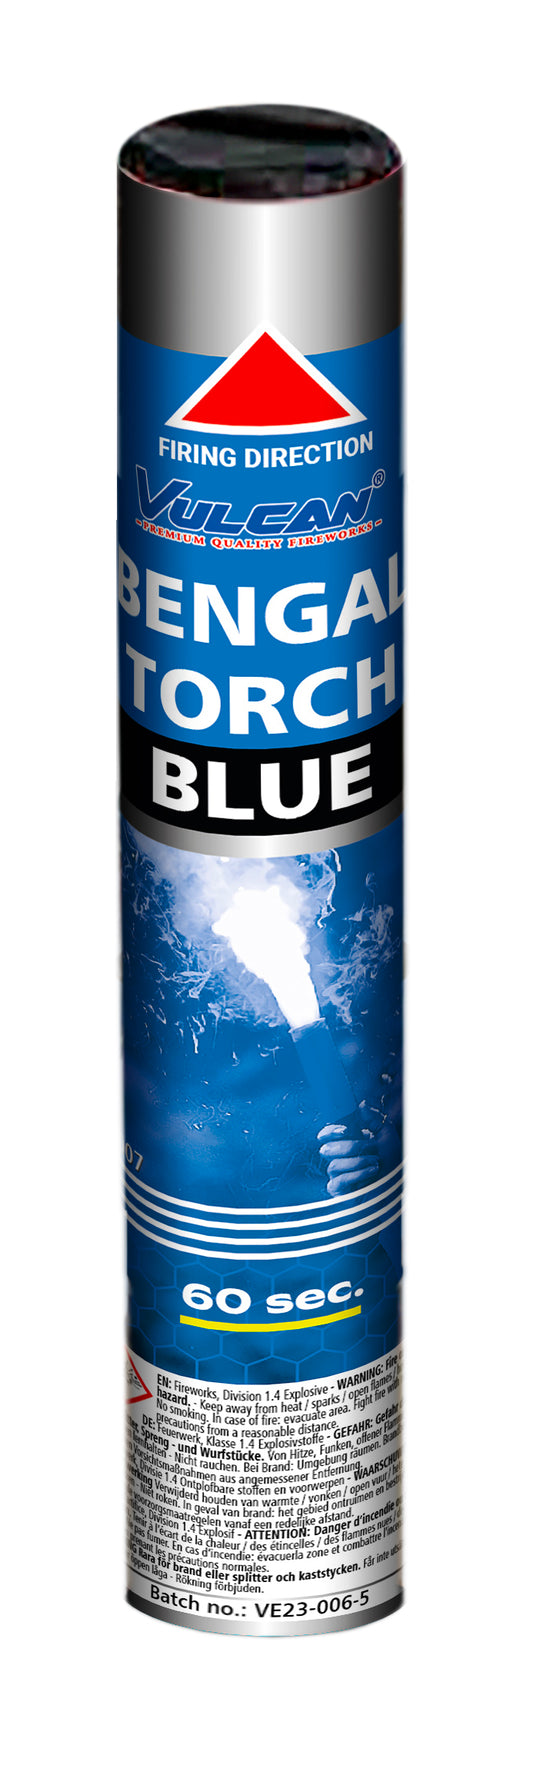 Bengal Torch Blauw